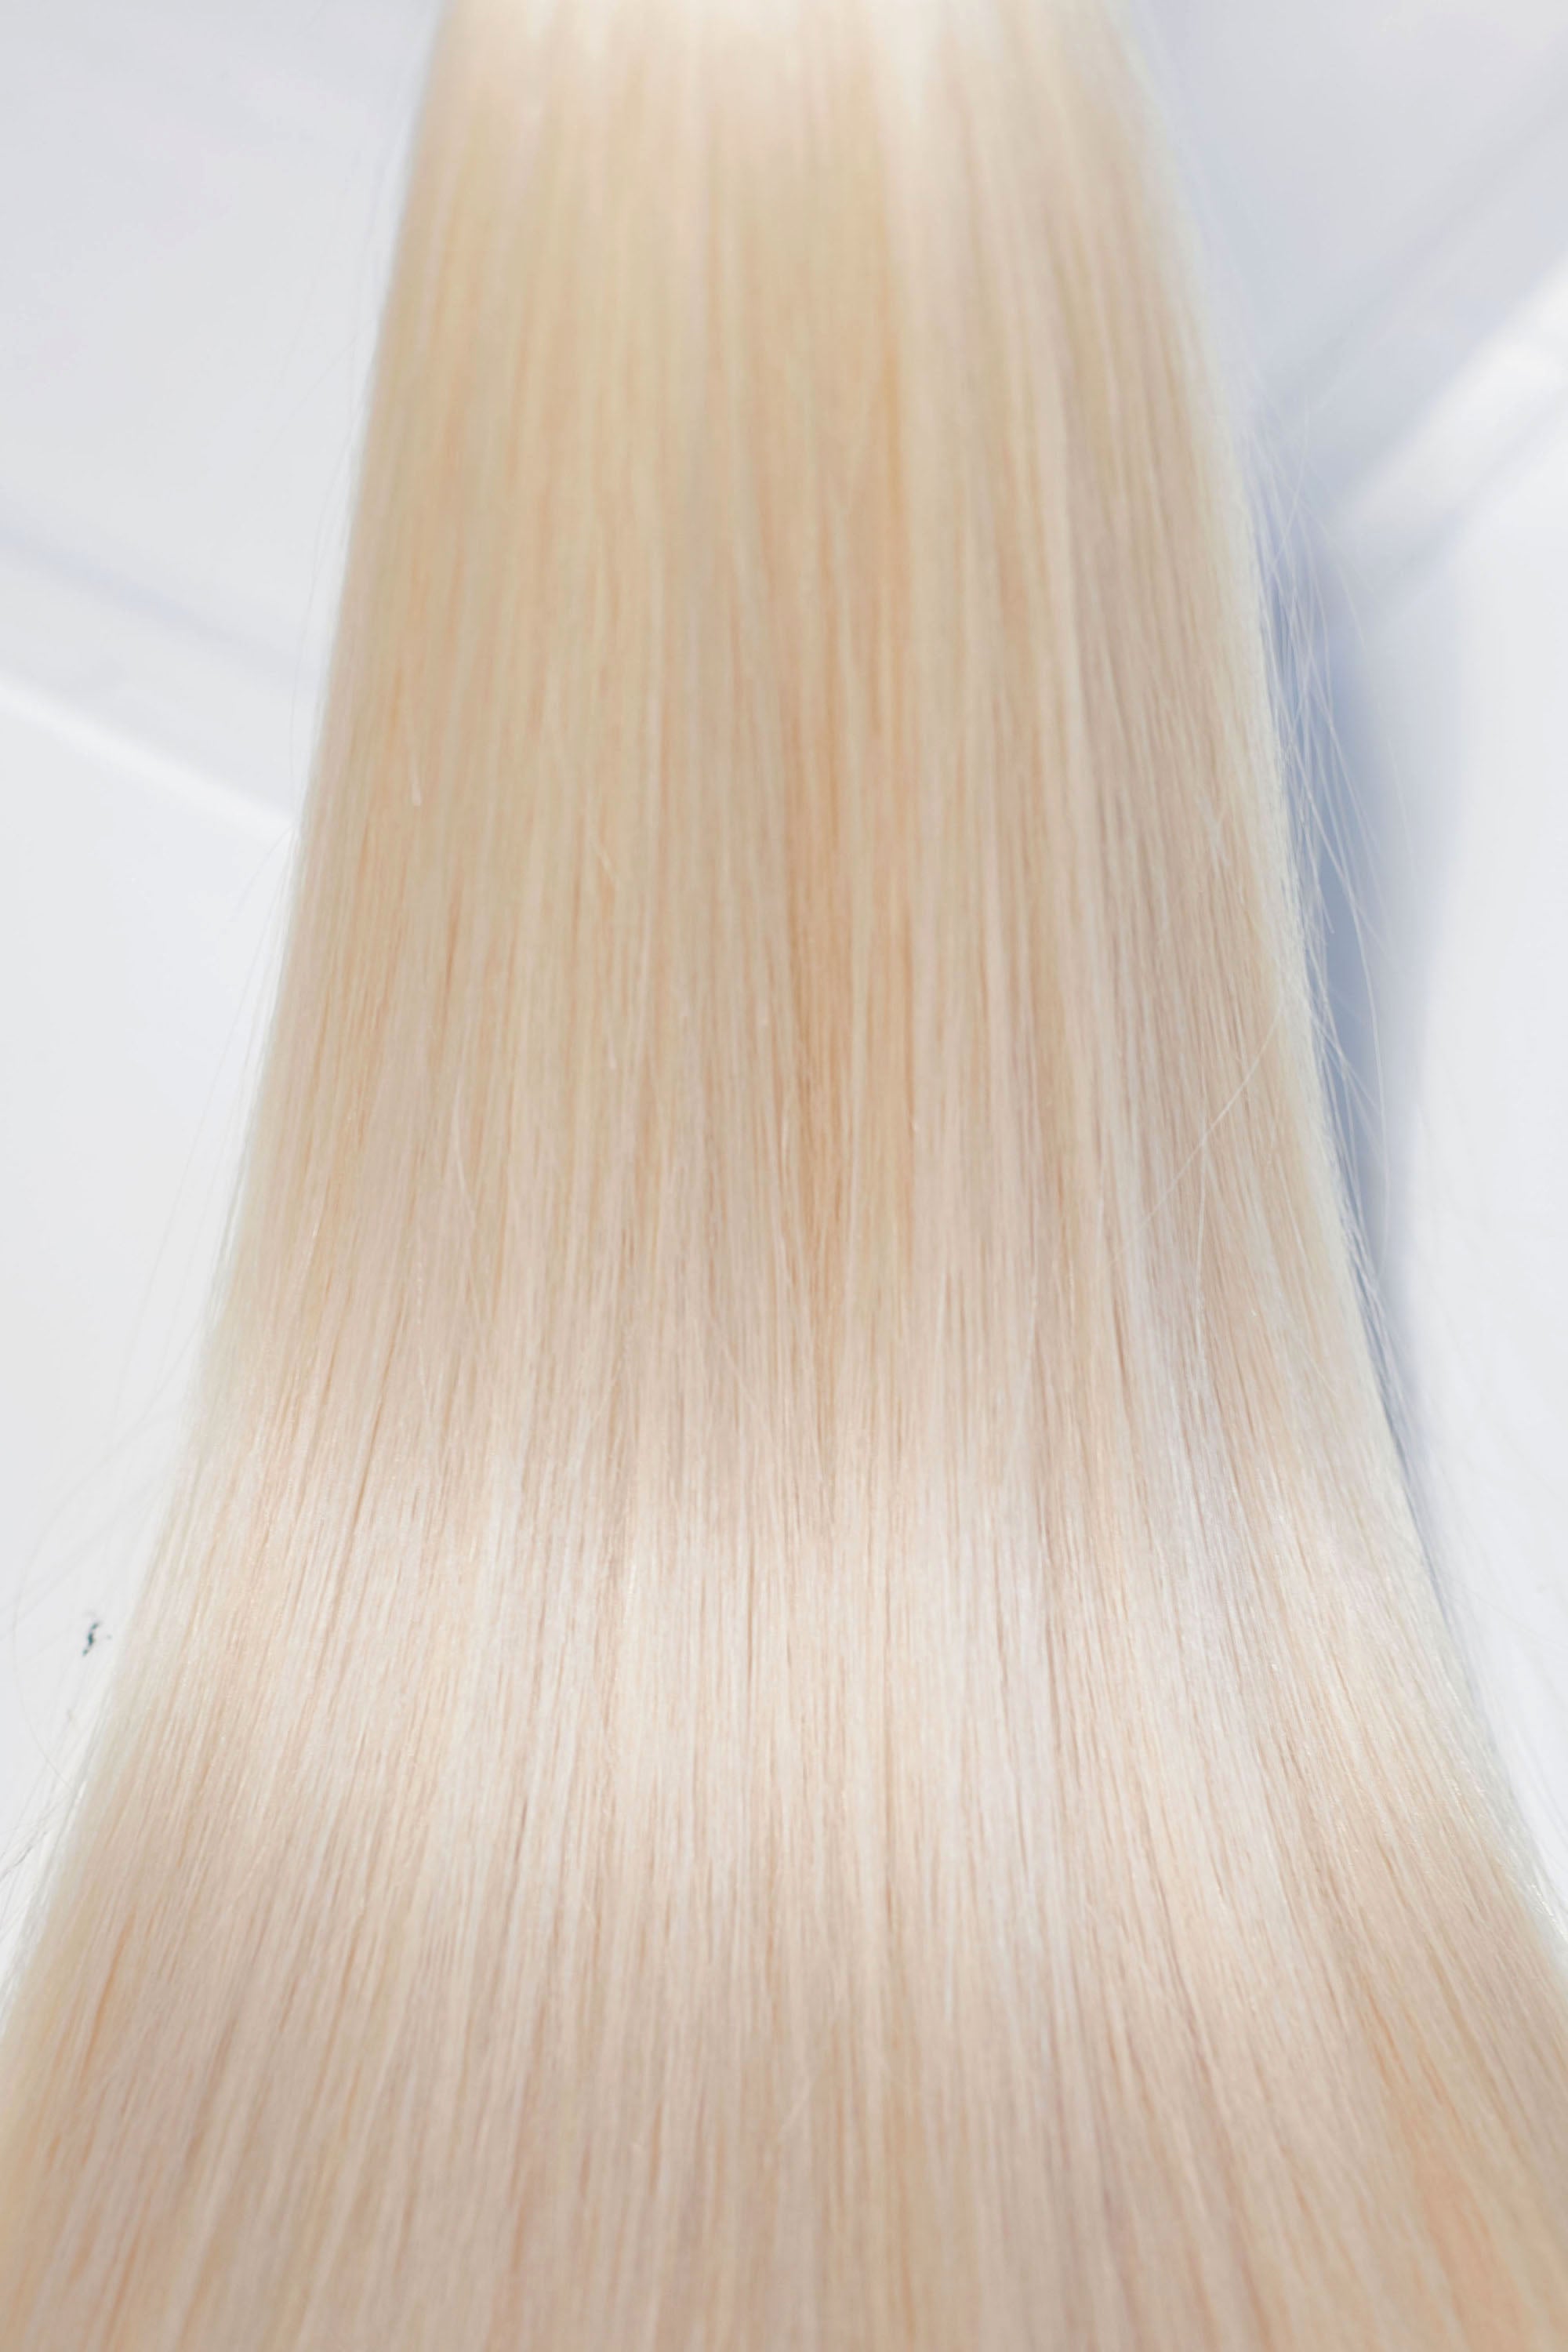 Behair professional Keratin Tip "Premium" 18" (45cm) Natural Straight Ice Blond #000 - 25g (1g each pcs) hair extensions